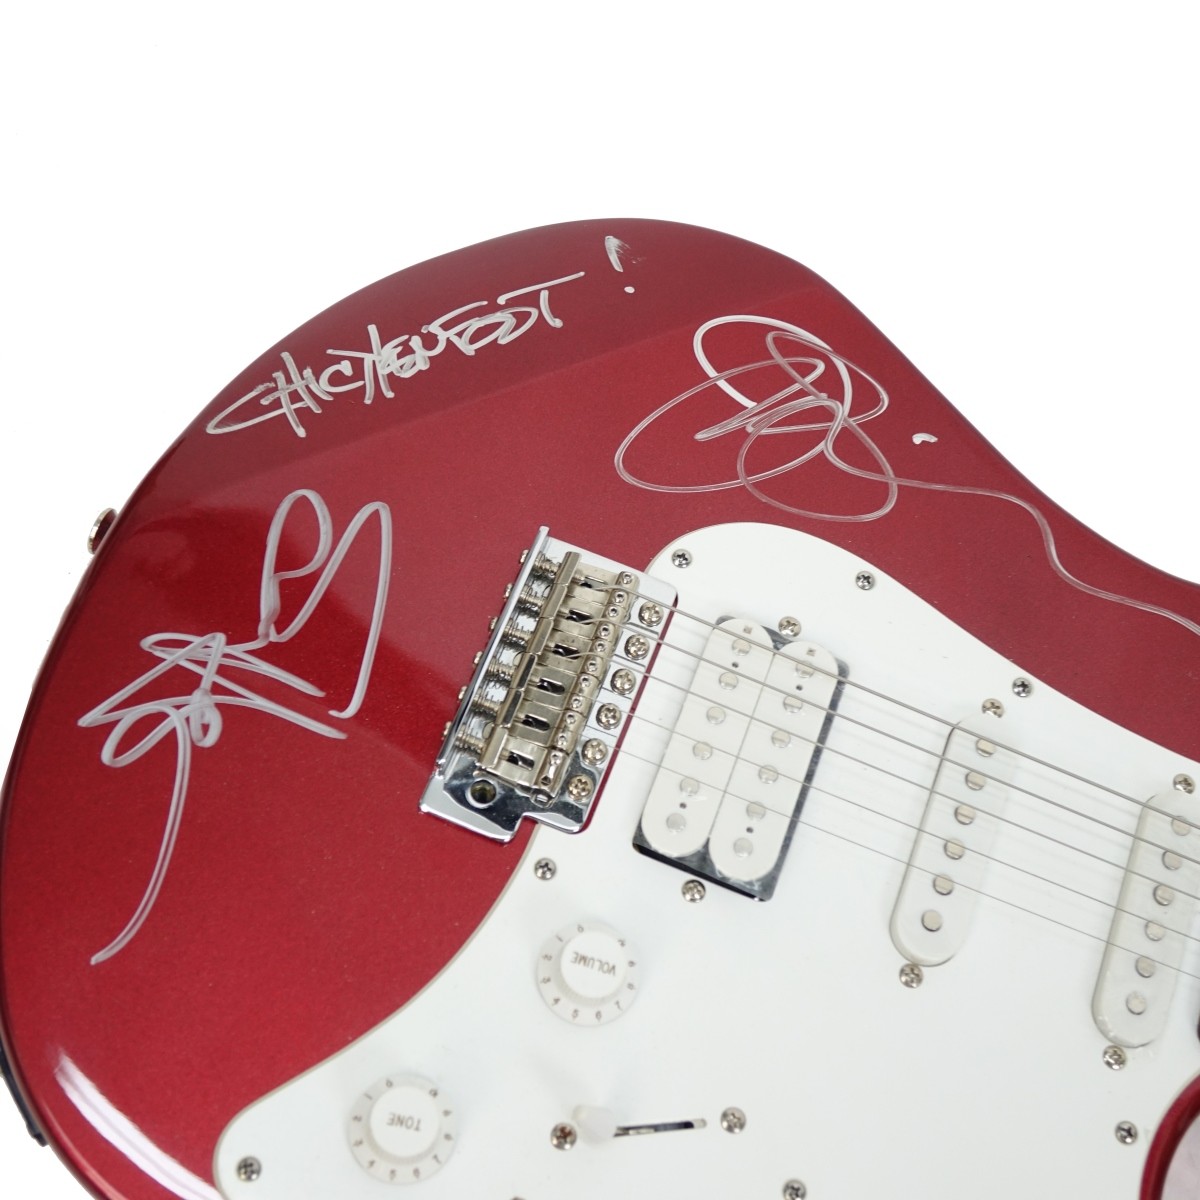 Joe Satriani Autographed Yamaha Guitar